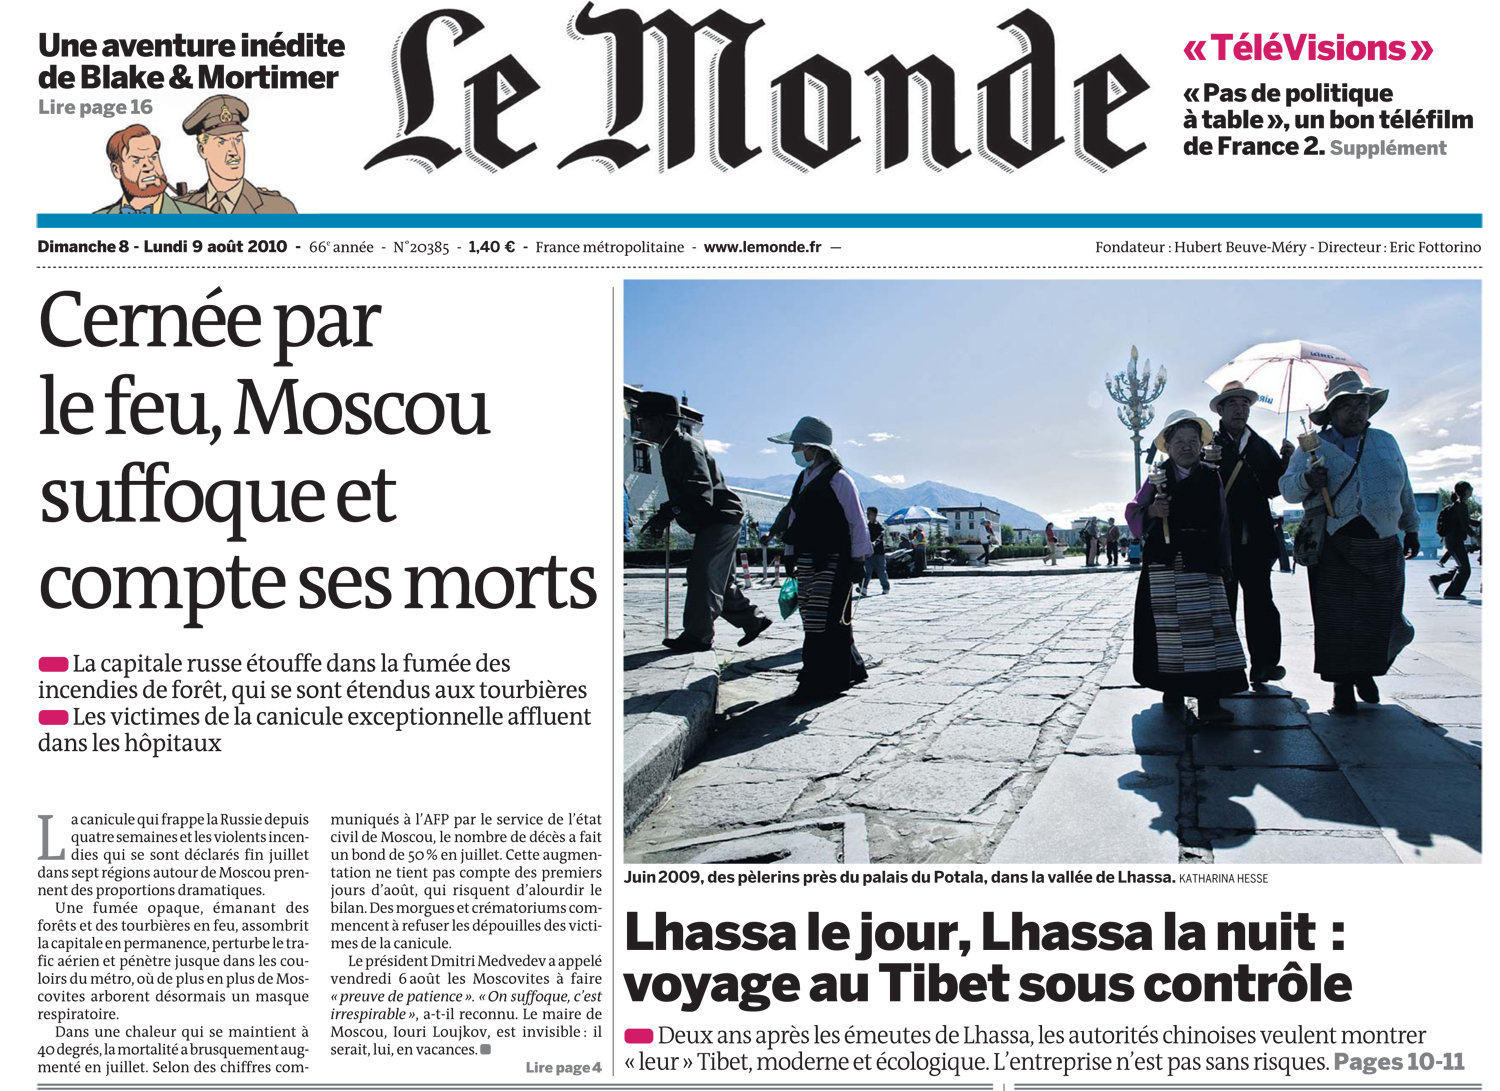 Le Monde 1/2 : Aug,2010